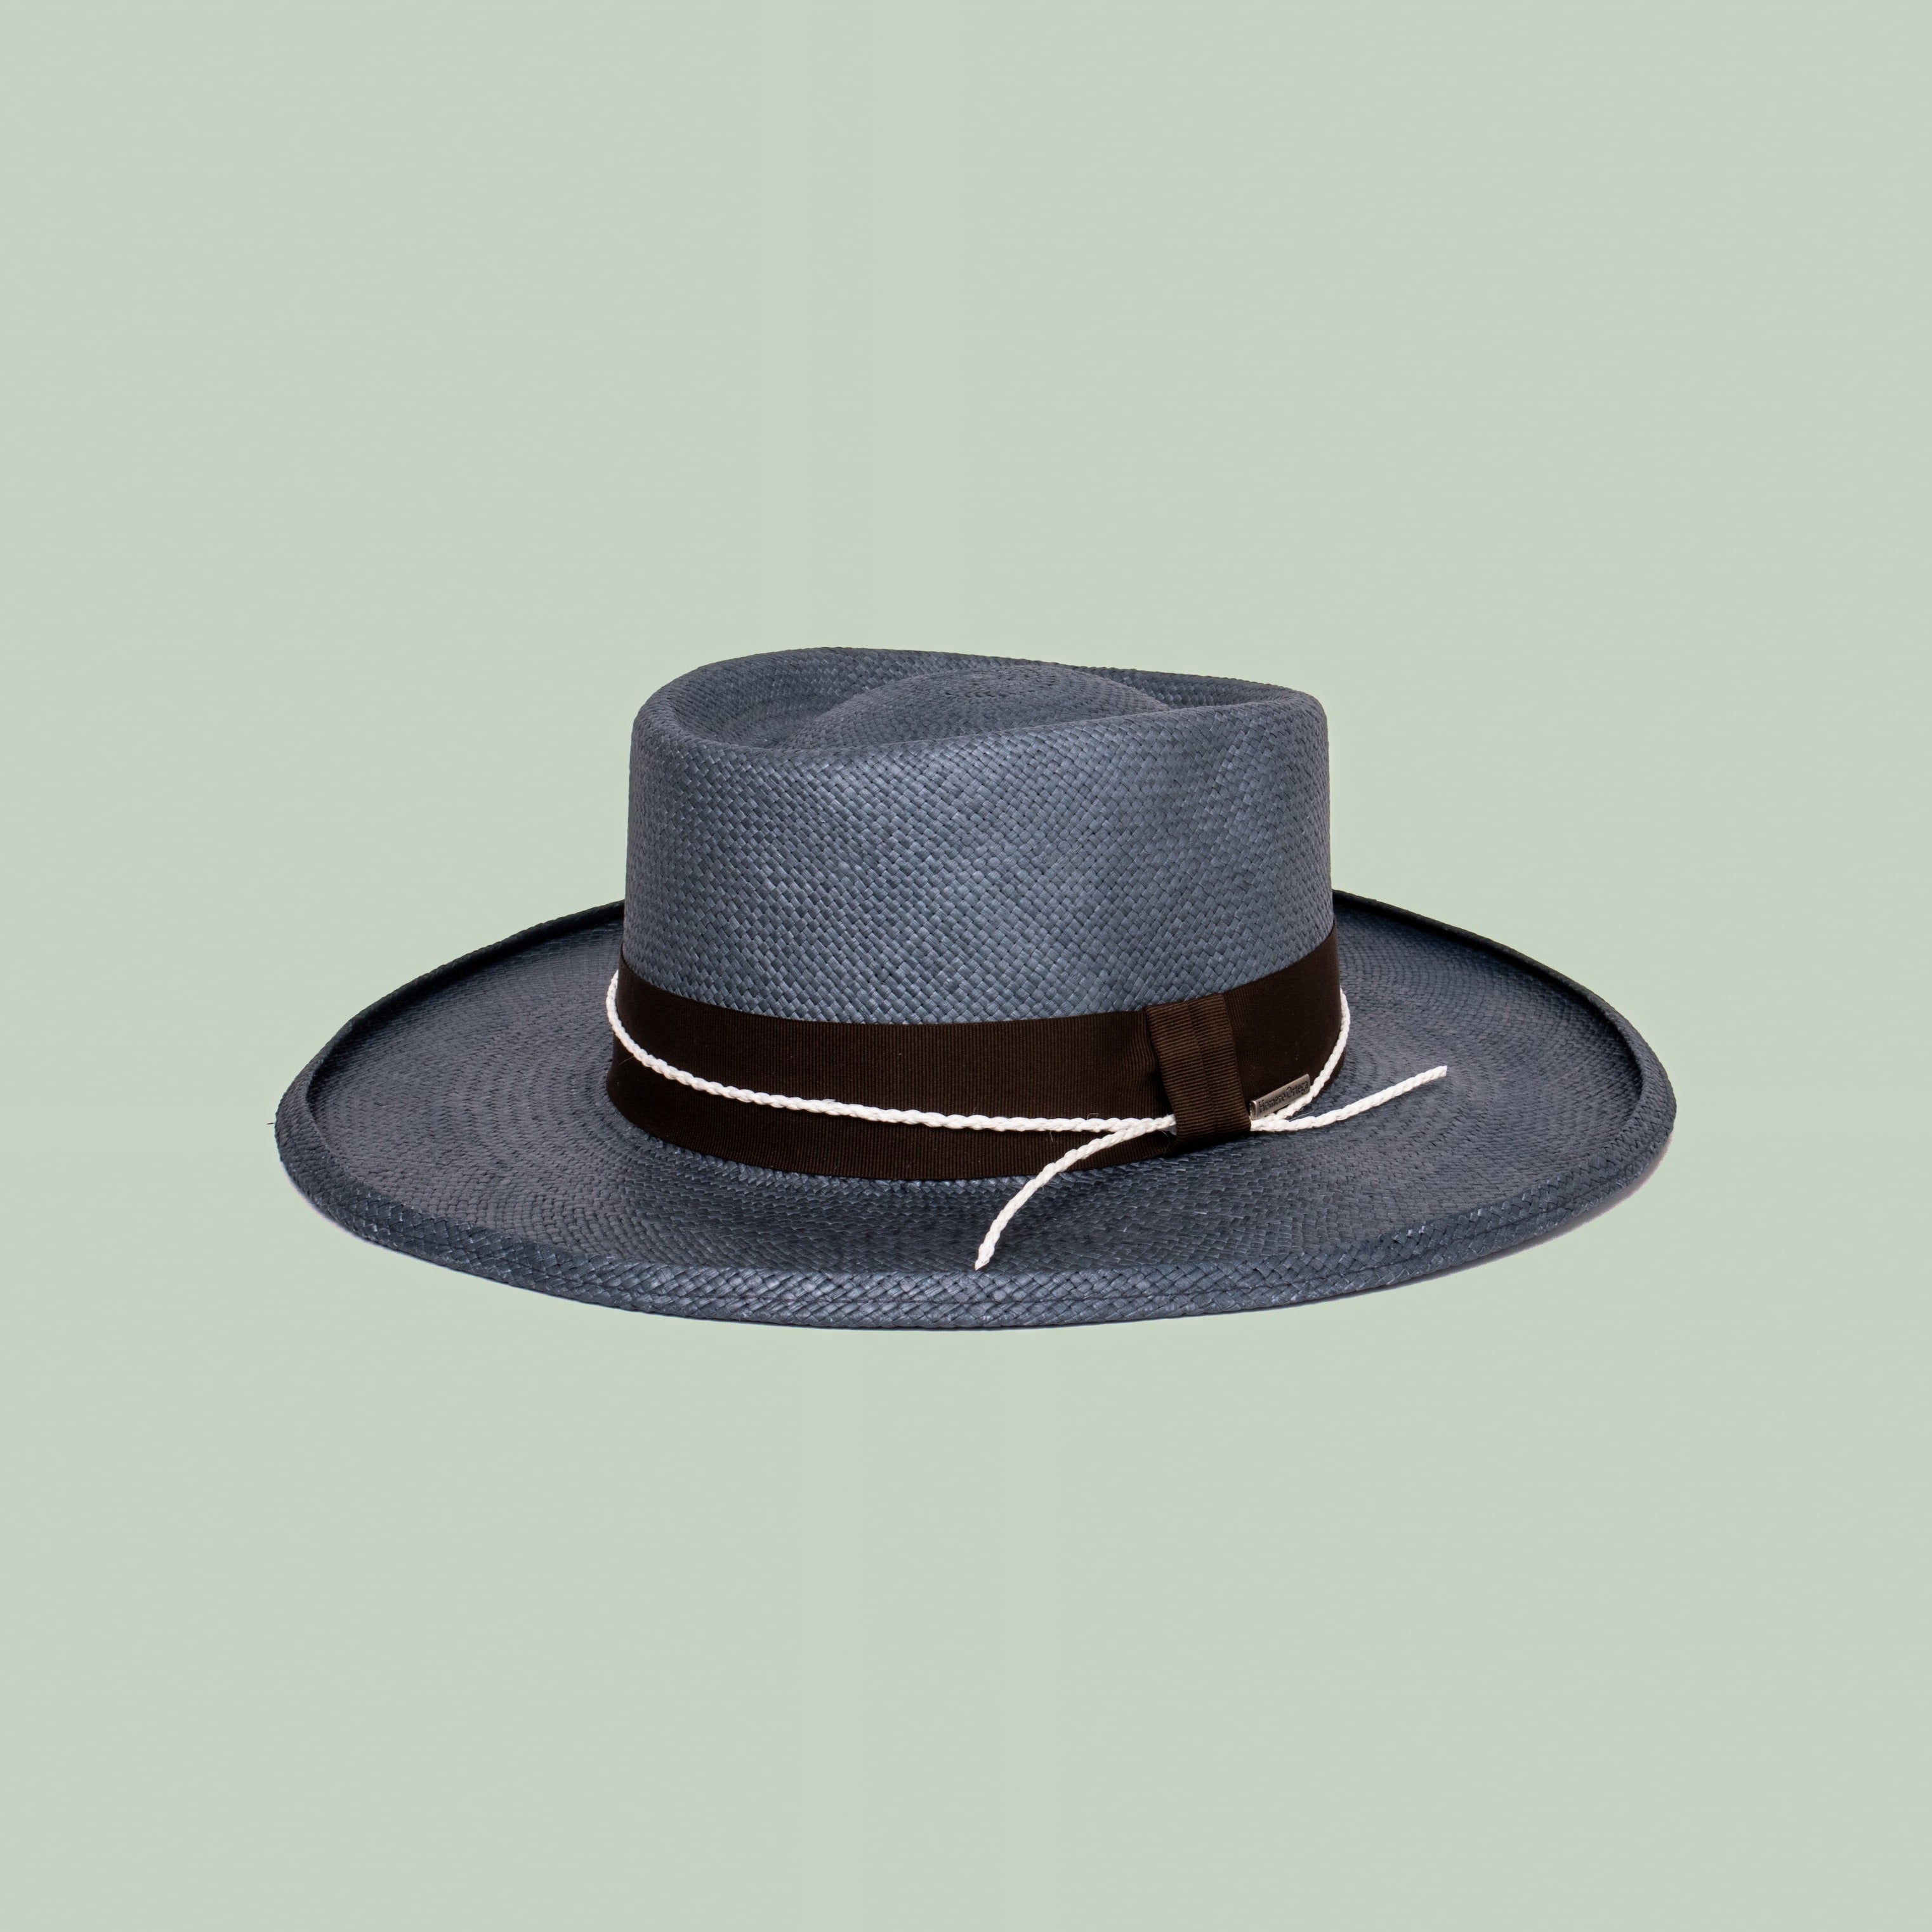 sustainable hats for men australia